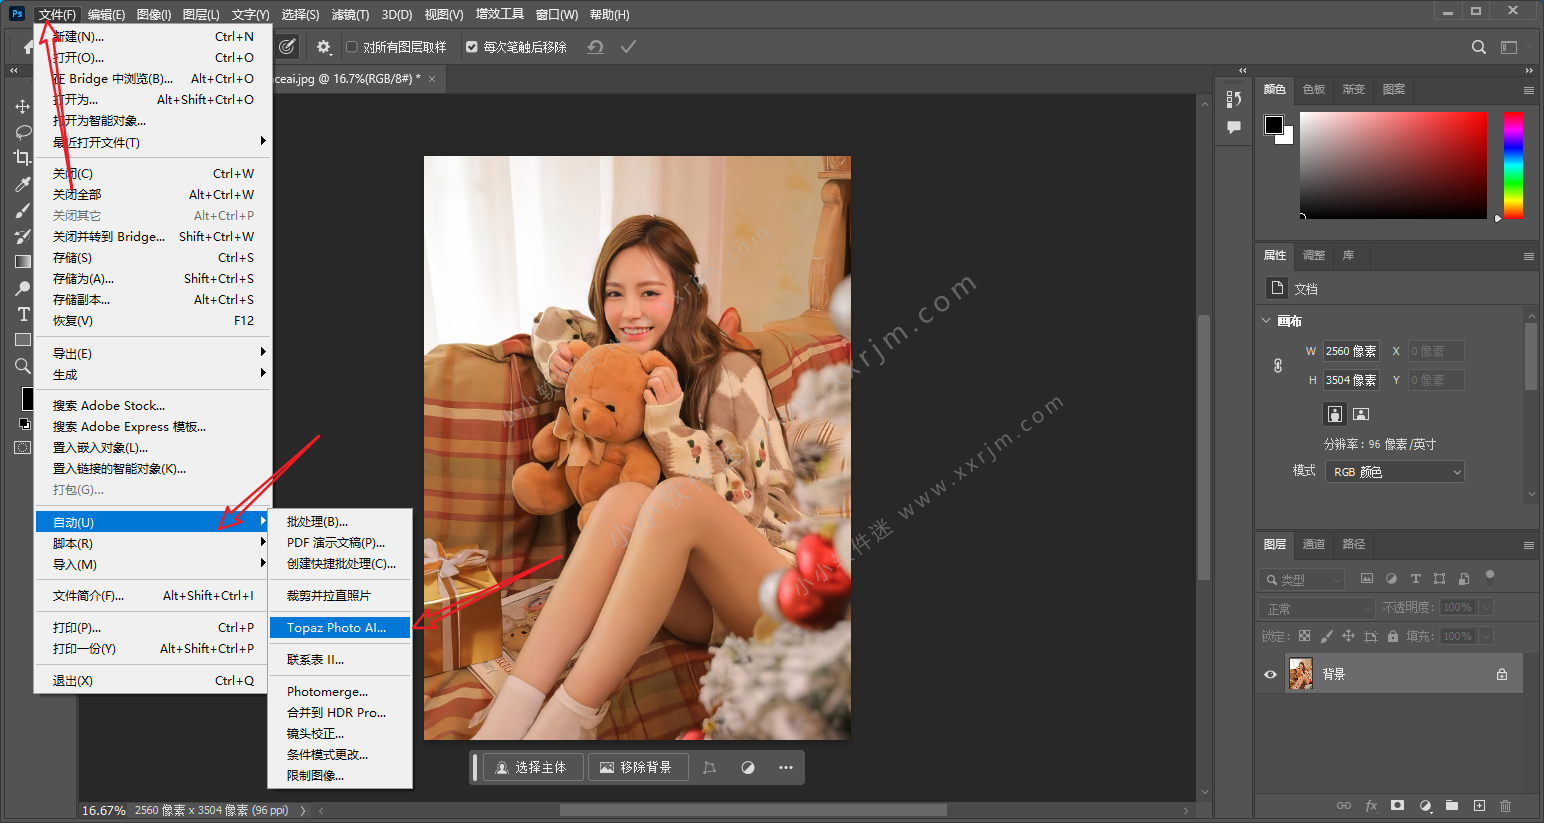 Topaz Photo AI v2.3.0 中文汉化安装版